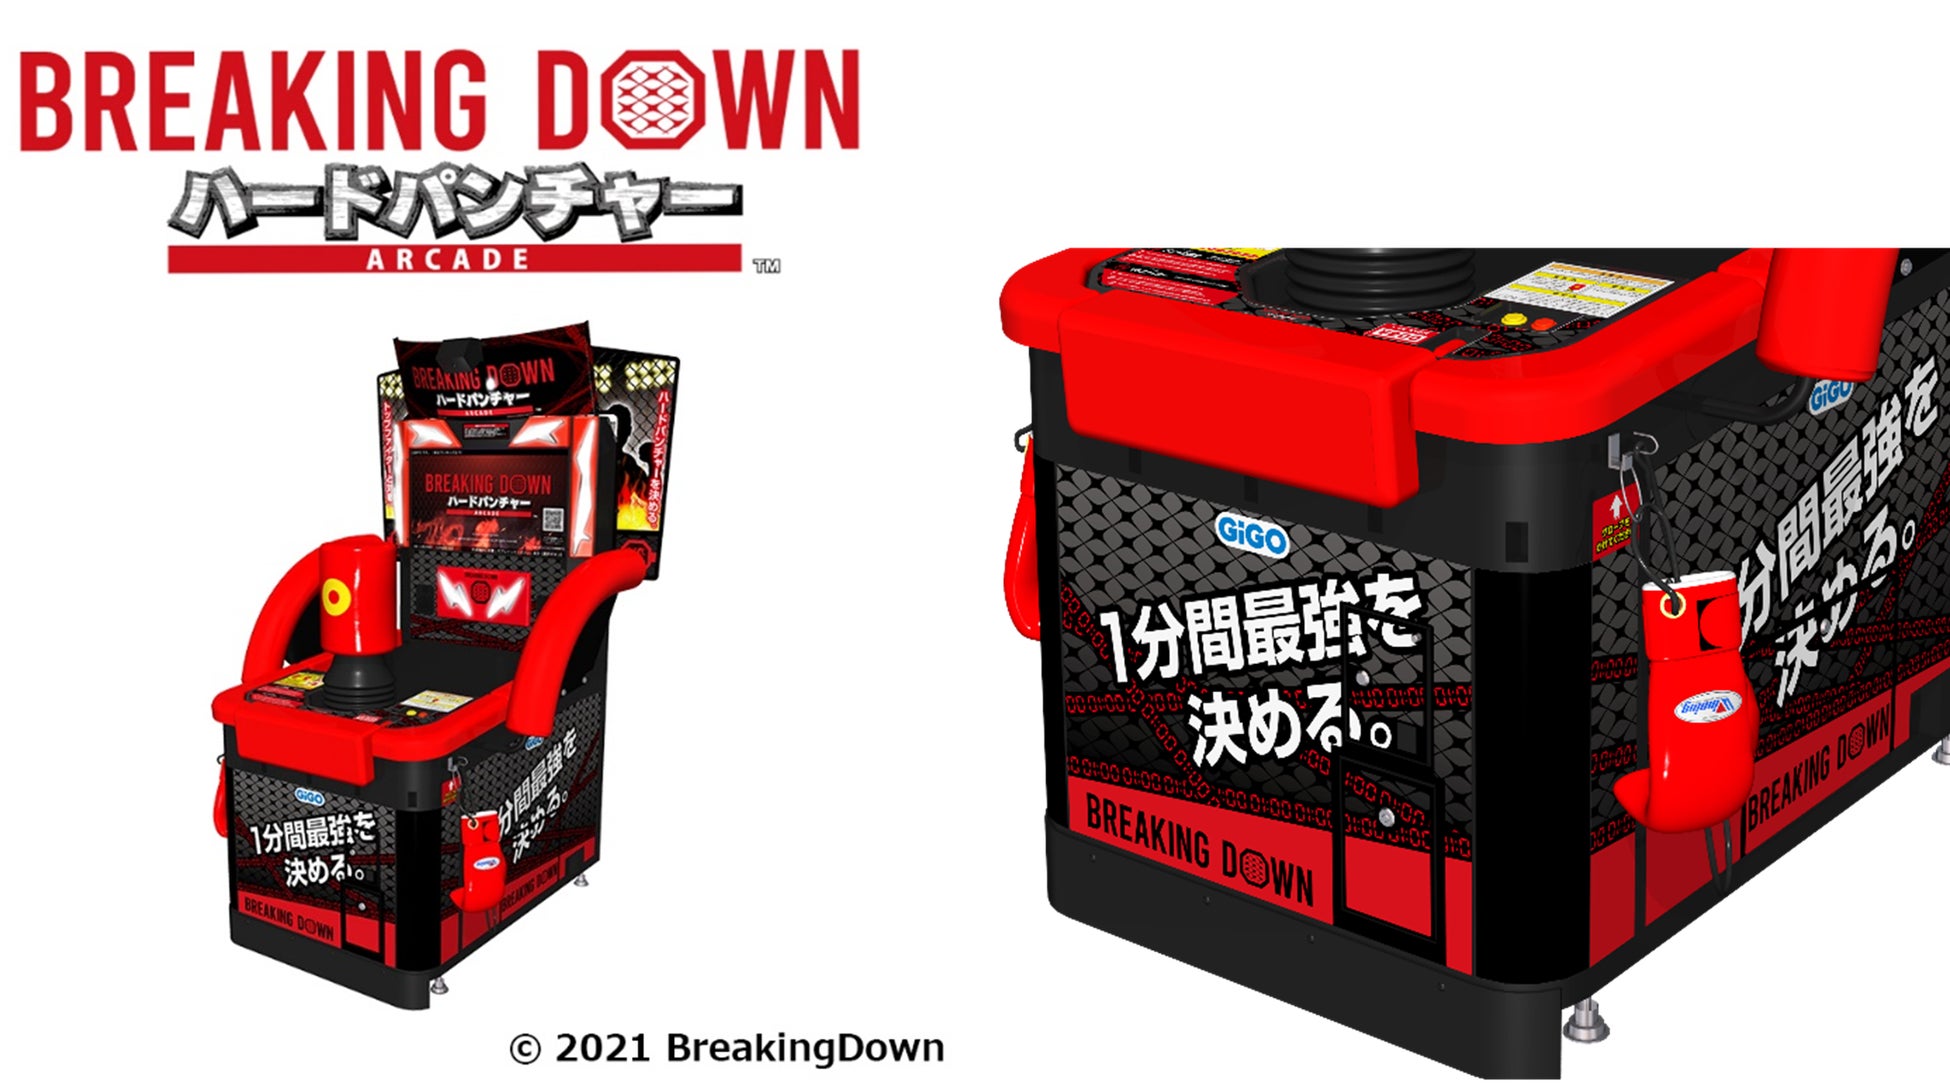 GiGO×BreakingDownの共同企画による新パンチングマシーン「BREAKING DOWN ハードパンチャー ARCADE」が全国のGiGOグループのお店に登場！！